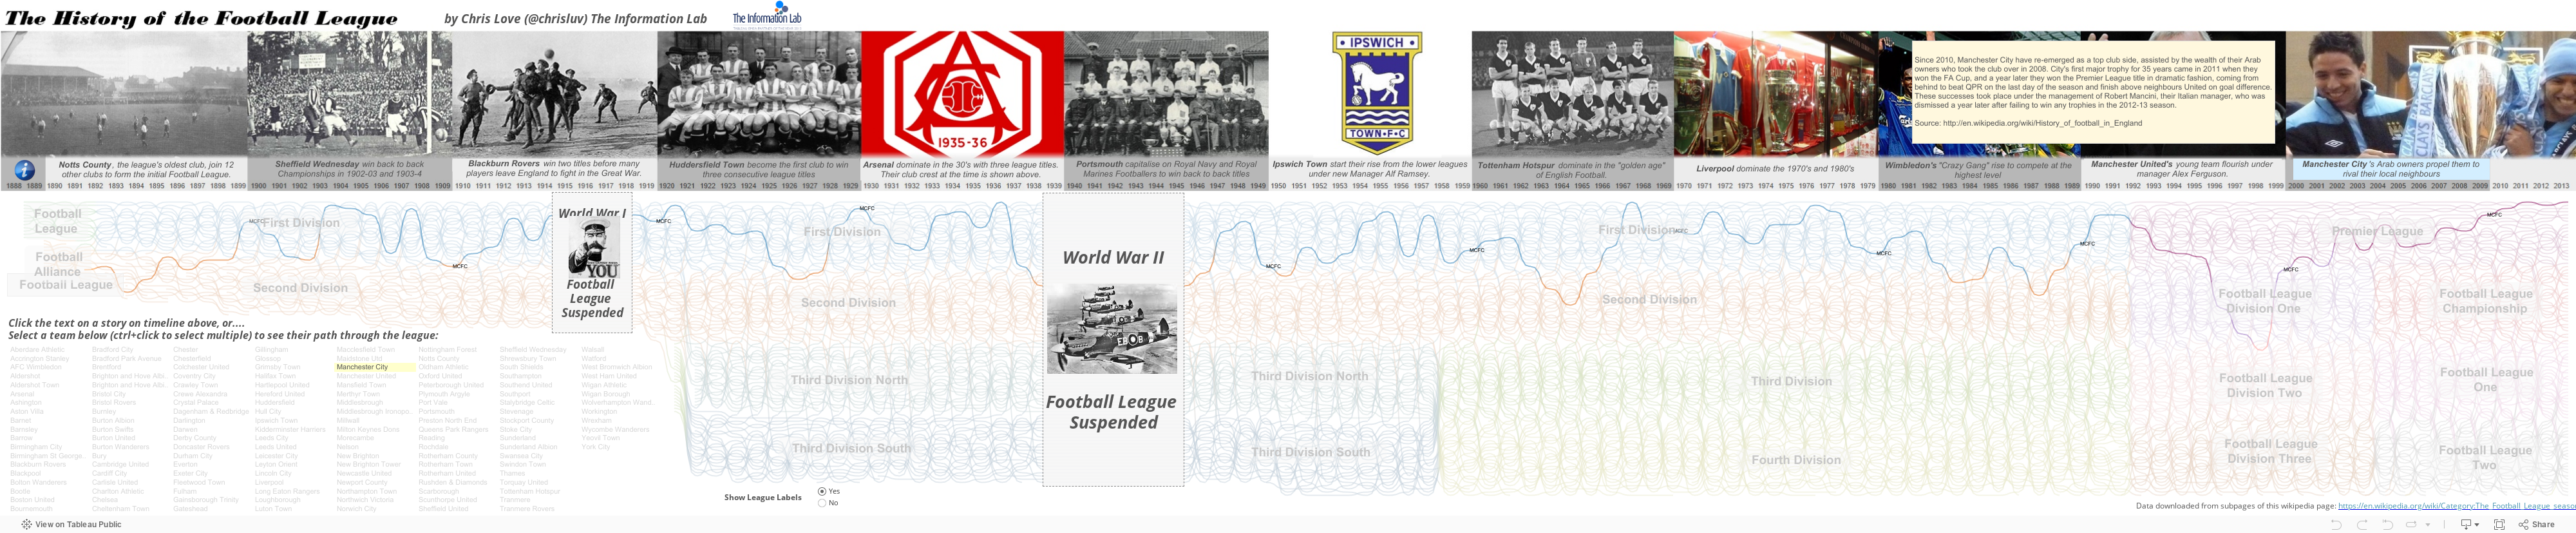 History of the Football League 